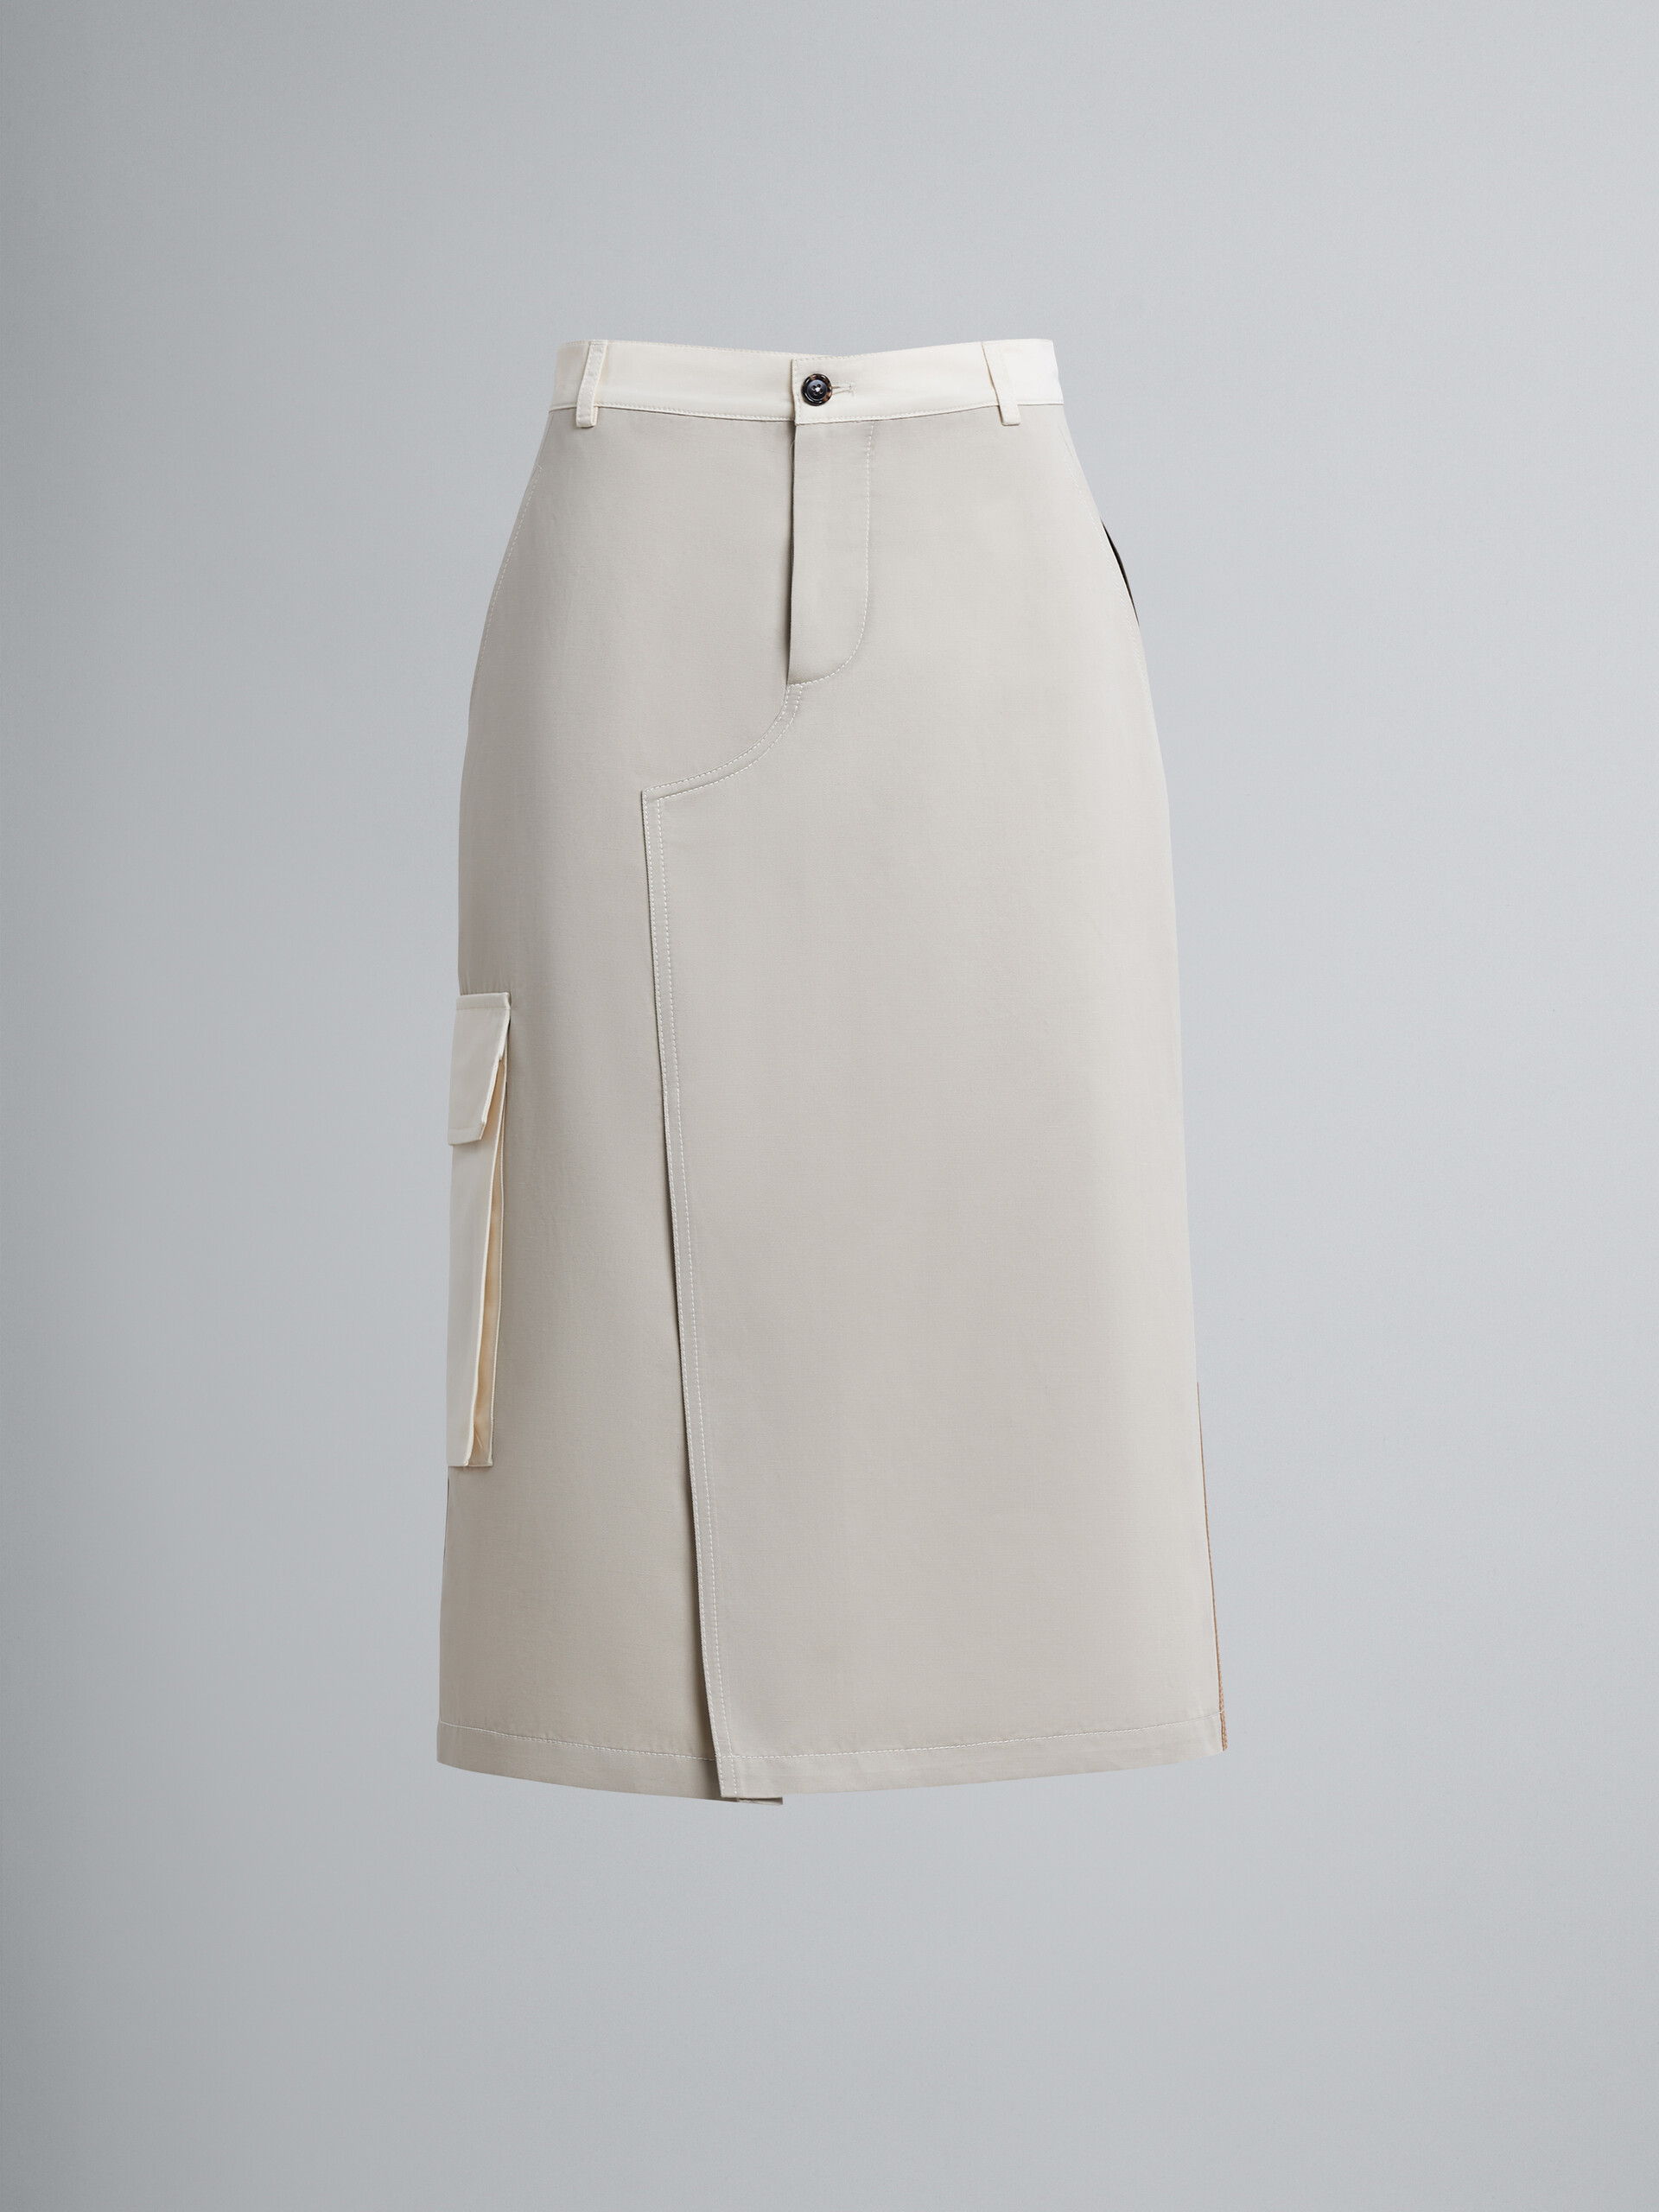 Cotton drill skirt - Skirts - Image 1